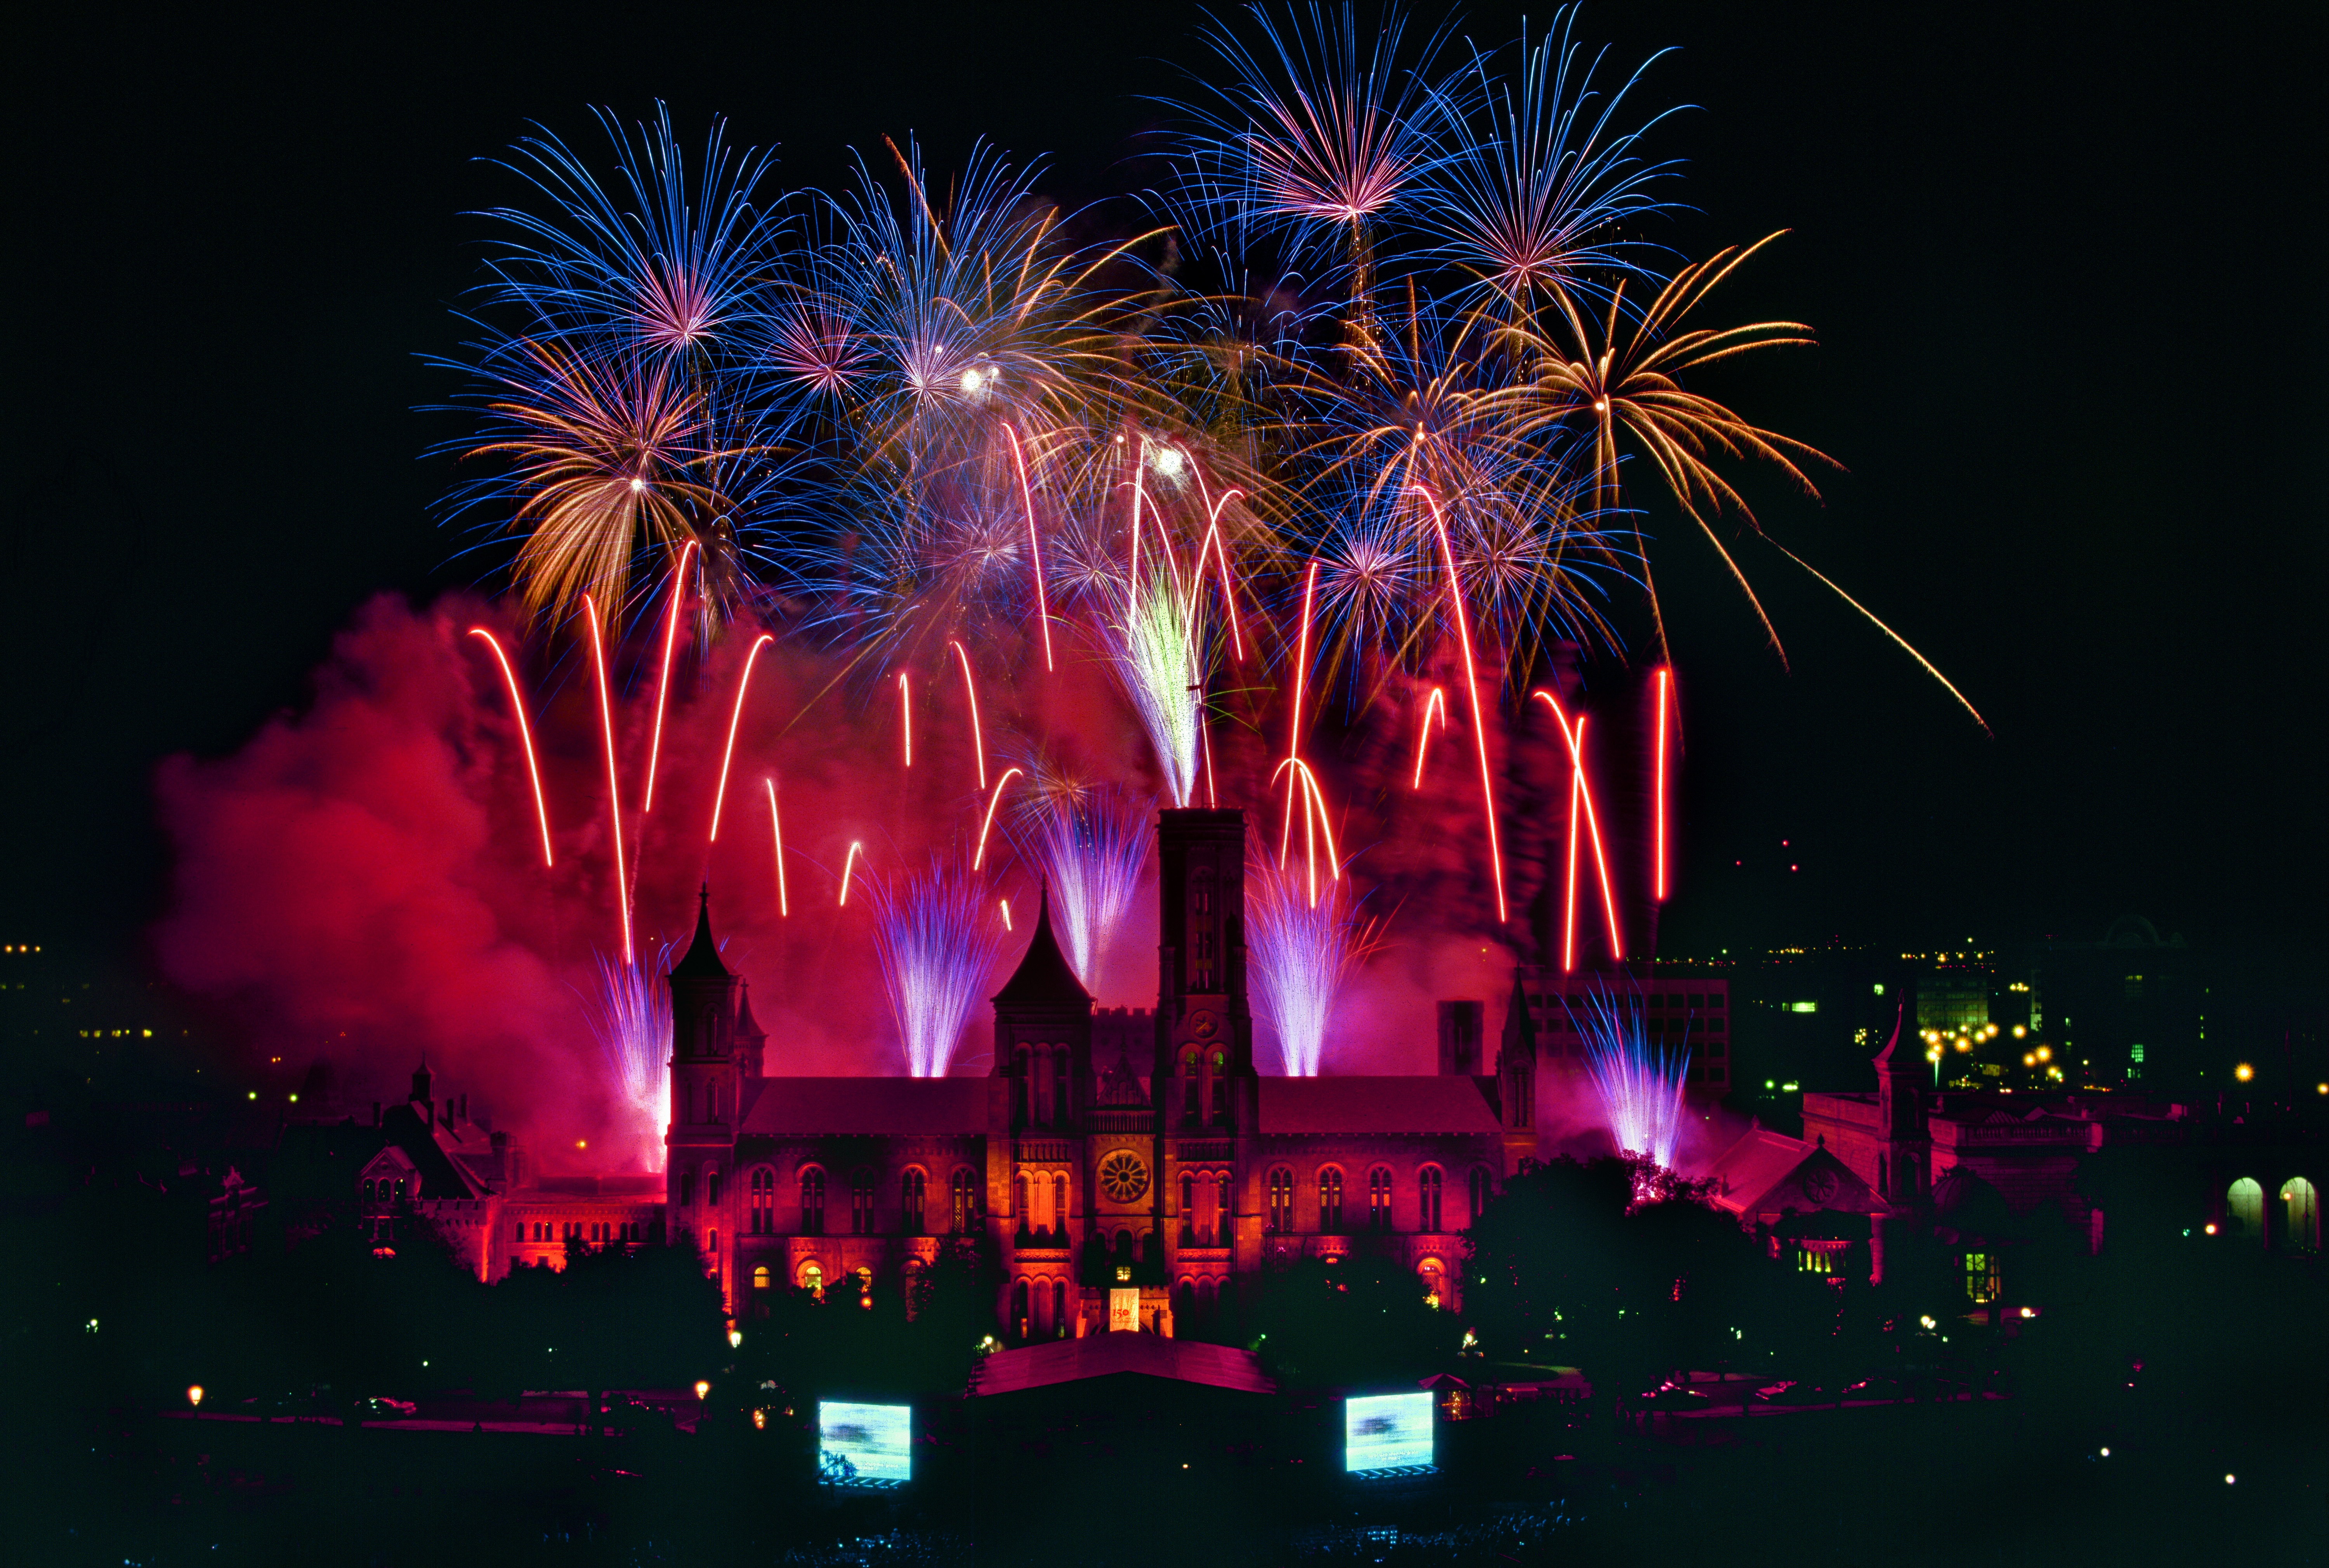 Fireworks over Castle for 150th Smithsonian Birthday Celebration, by Beth Lasko